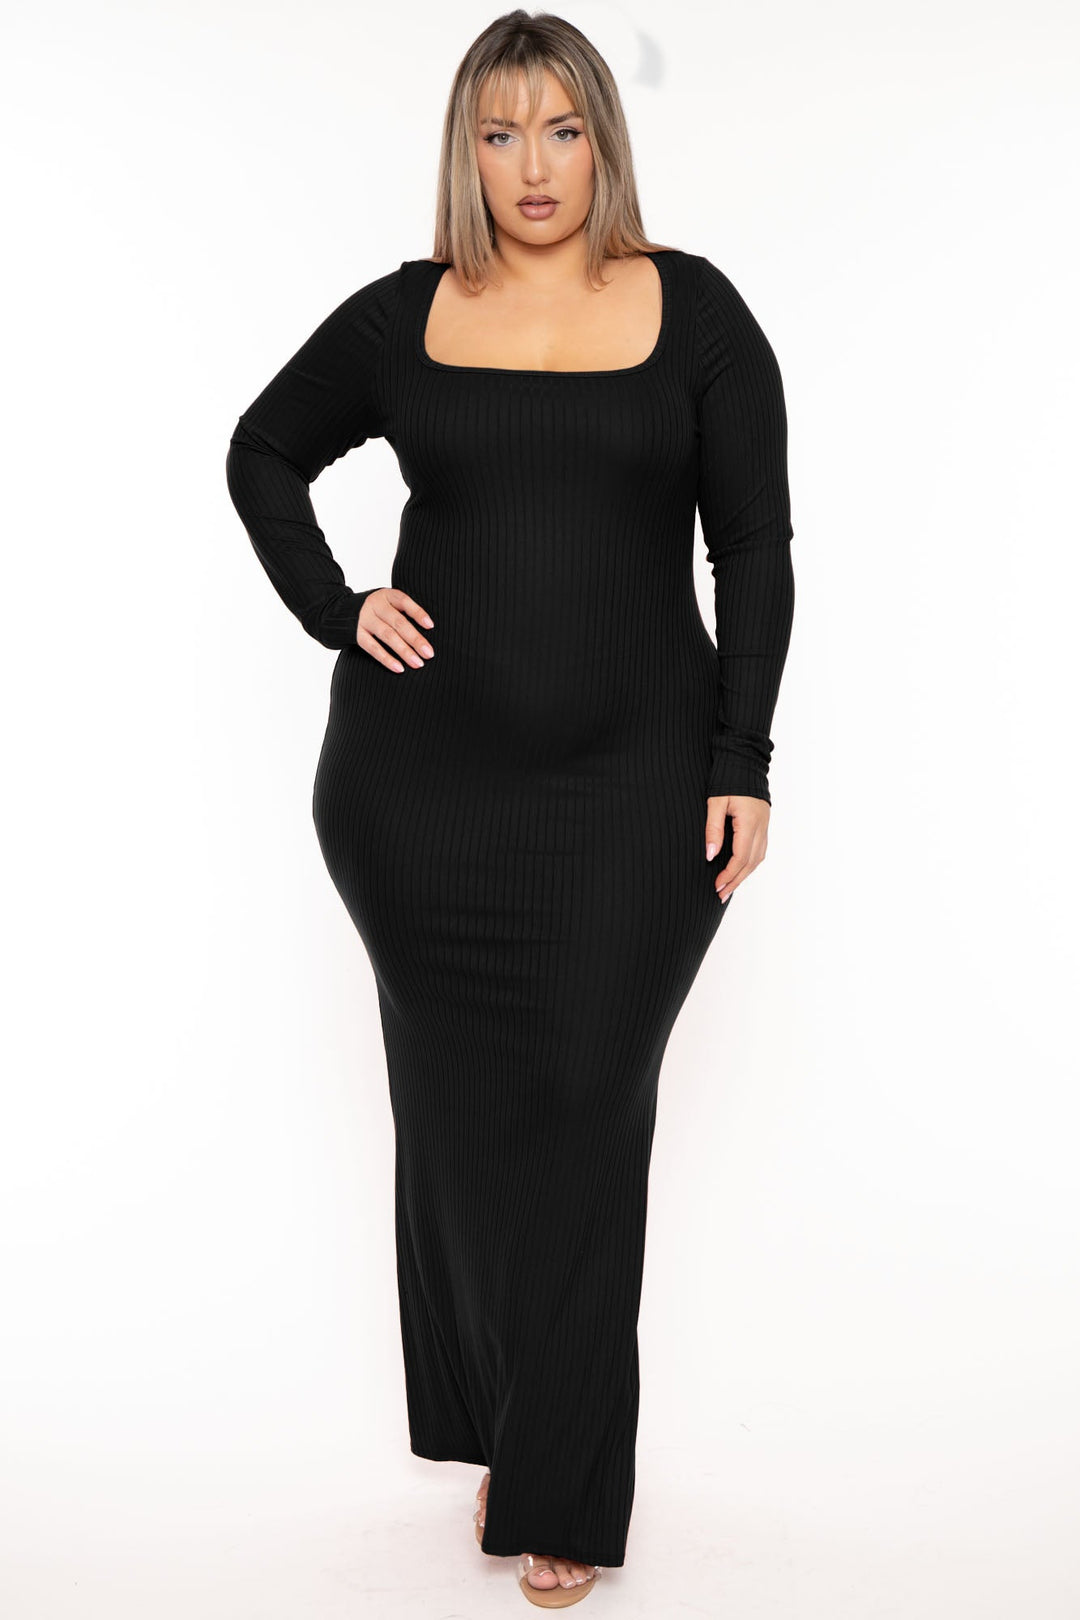 Plus Size Black Dresses & Curve Black Dresses